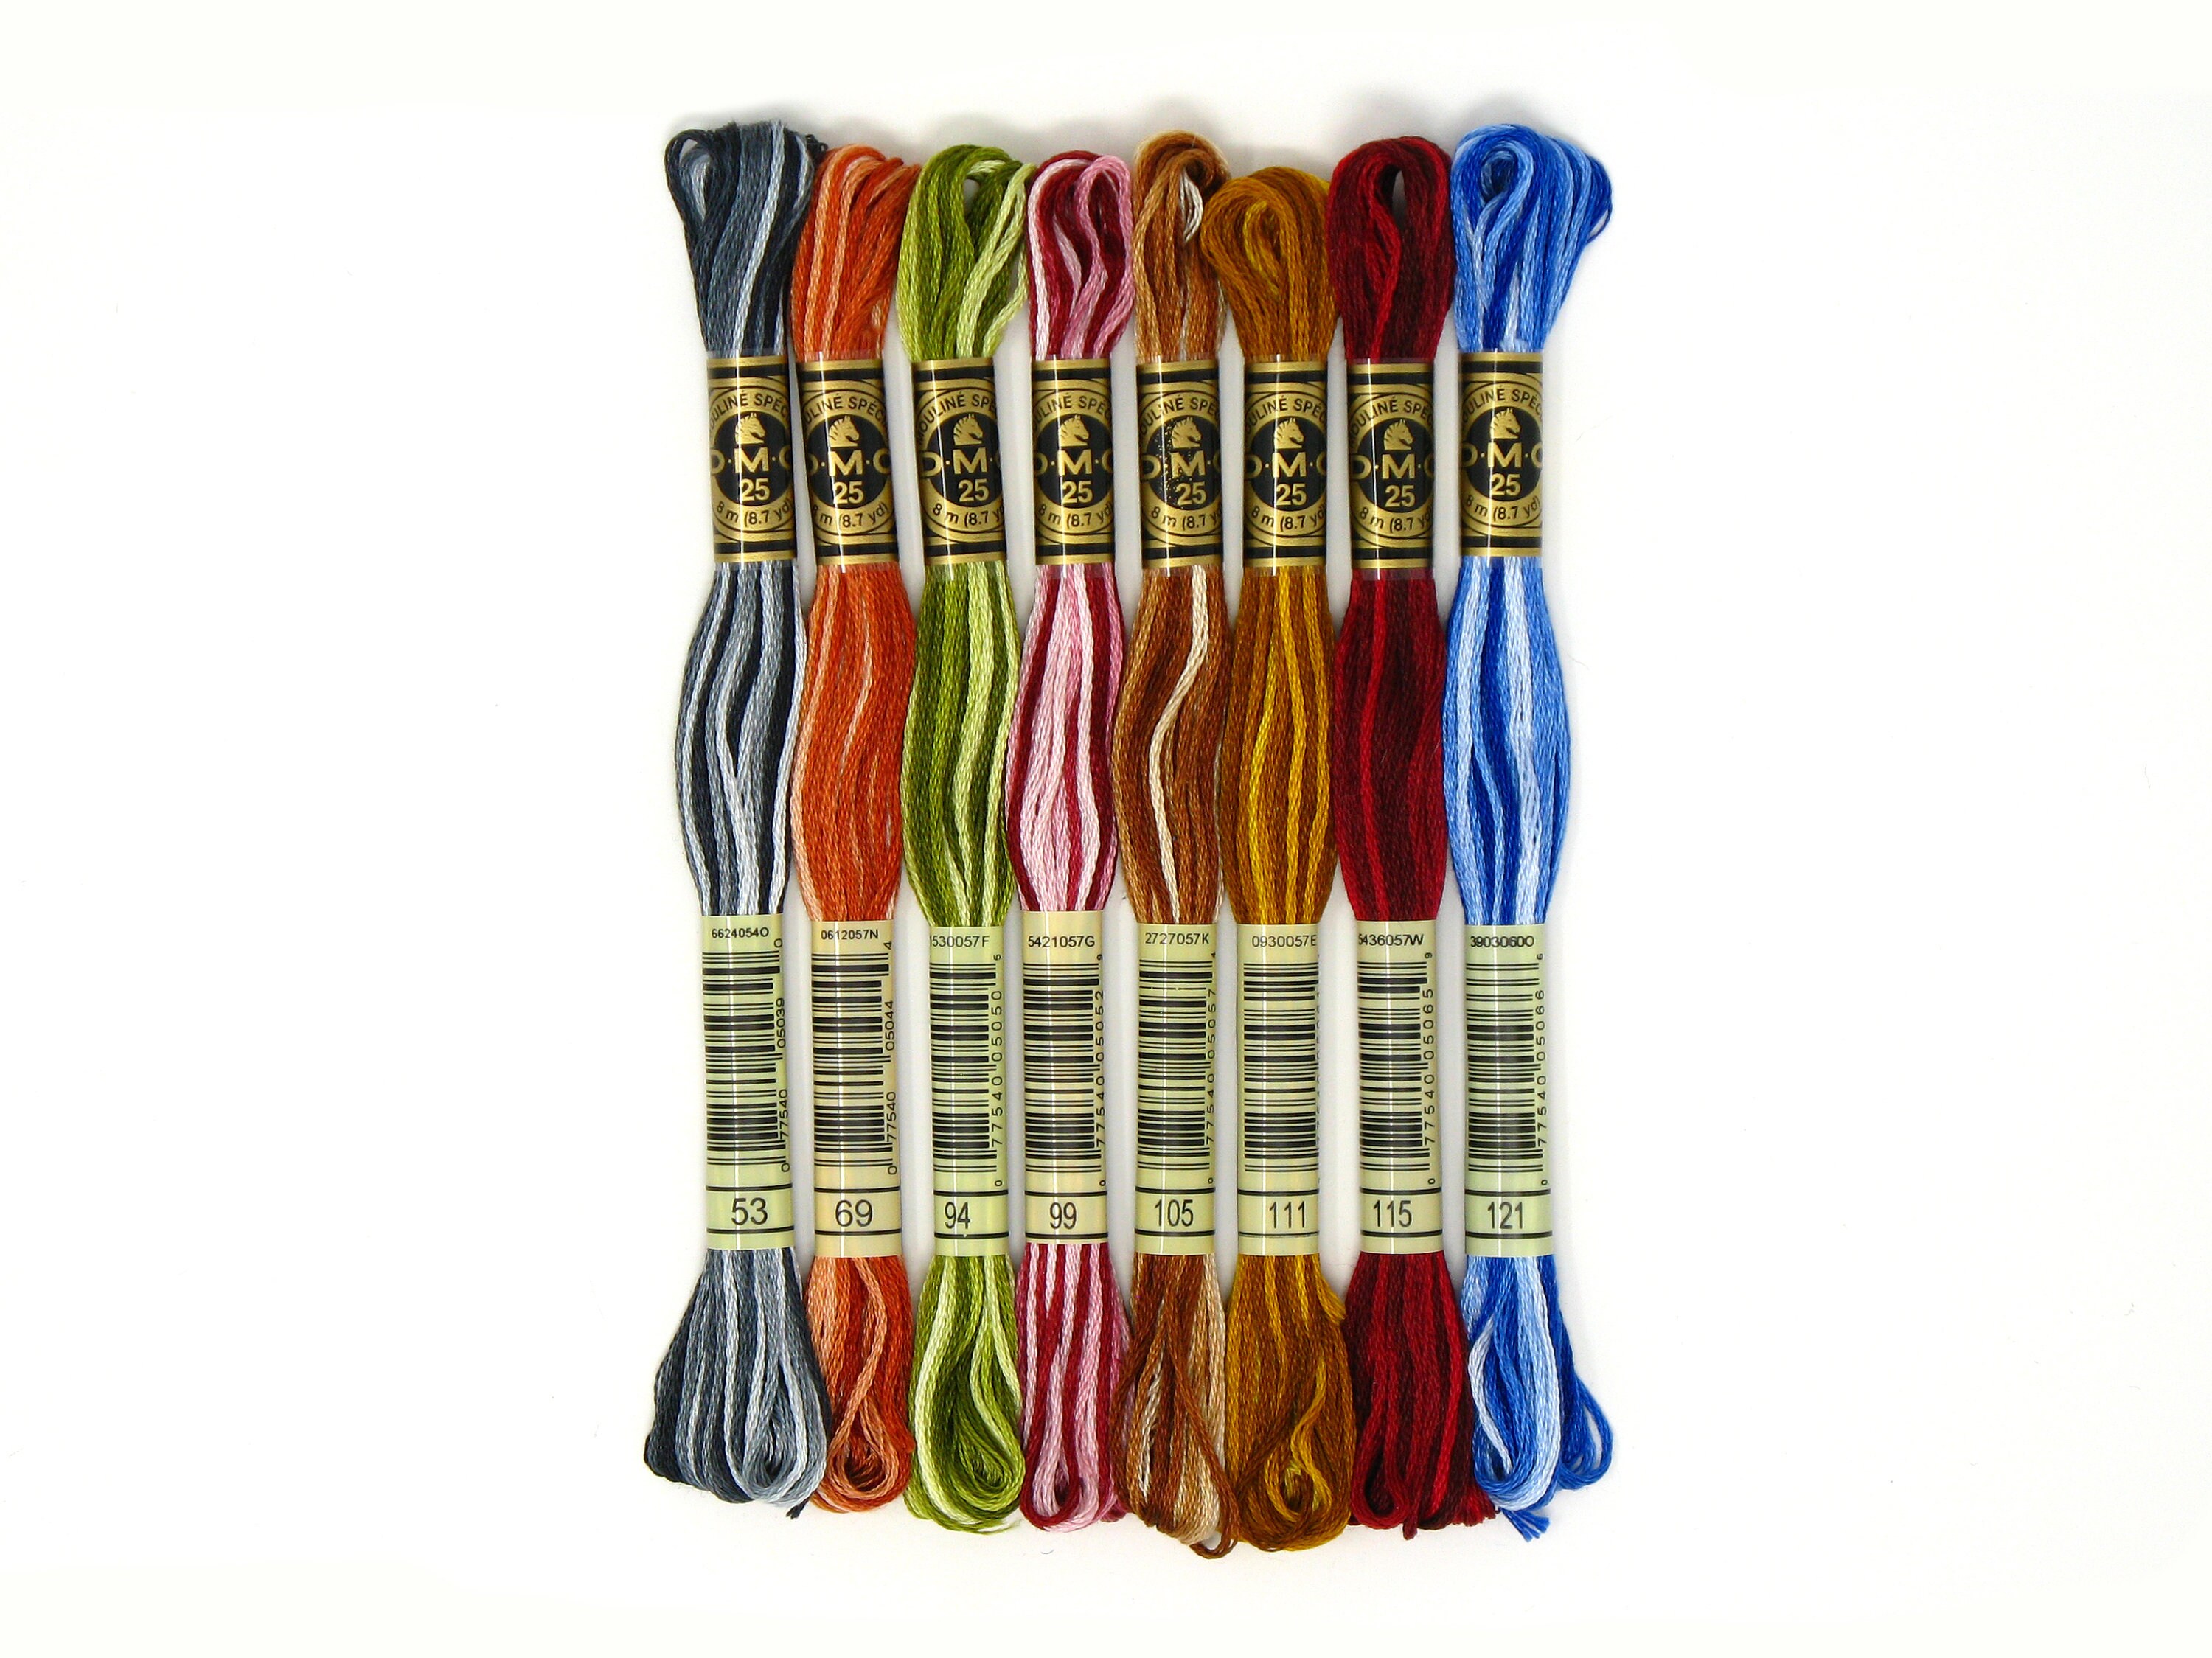 8x Fall DMC Flosses, Dmc Threads, DMC Kit, Dmc Set of Colors, Dmc Cotton  Floss, Dmc Embroidery Floss, Greenthreads, Cross Stitch Floss 